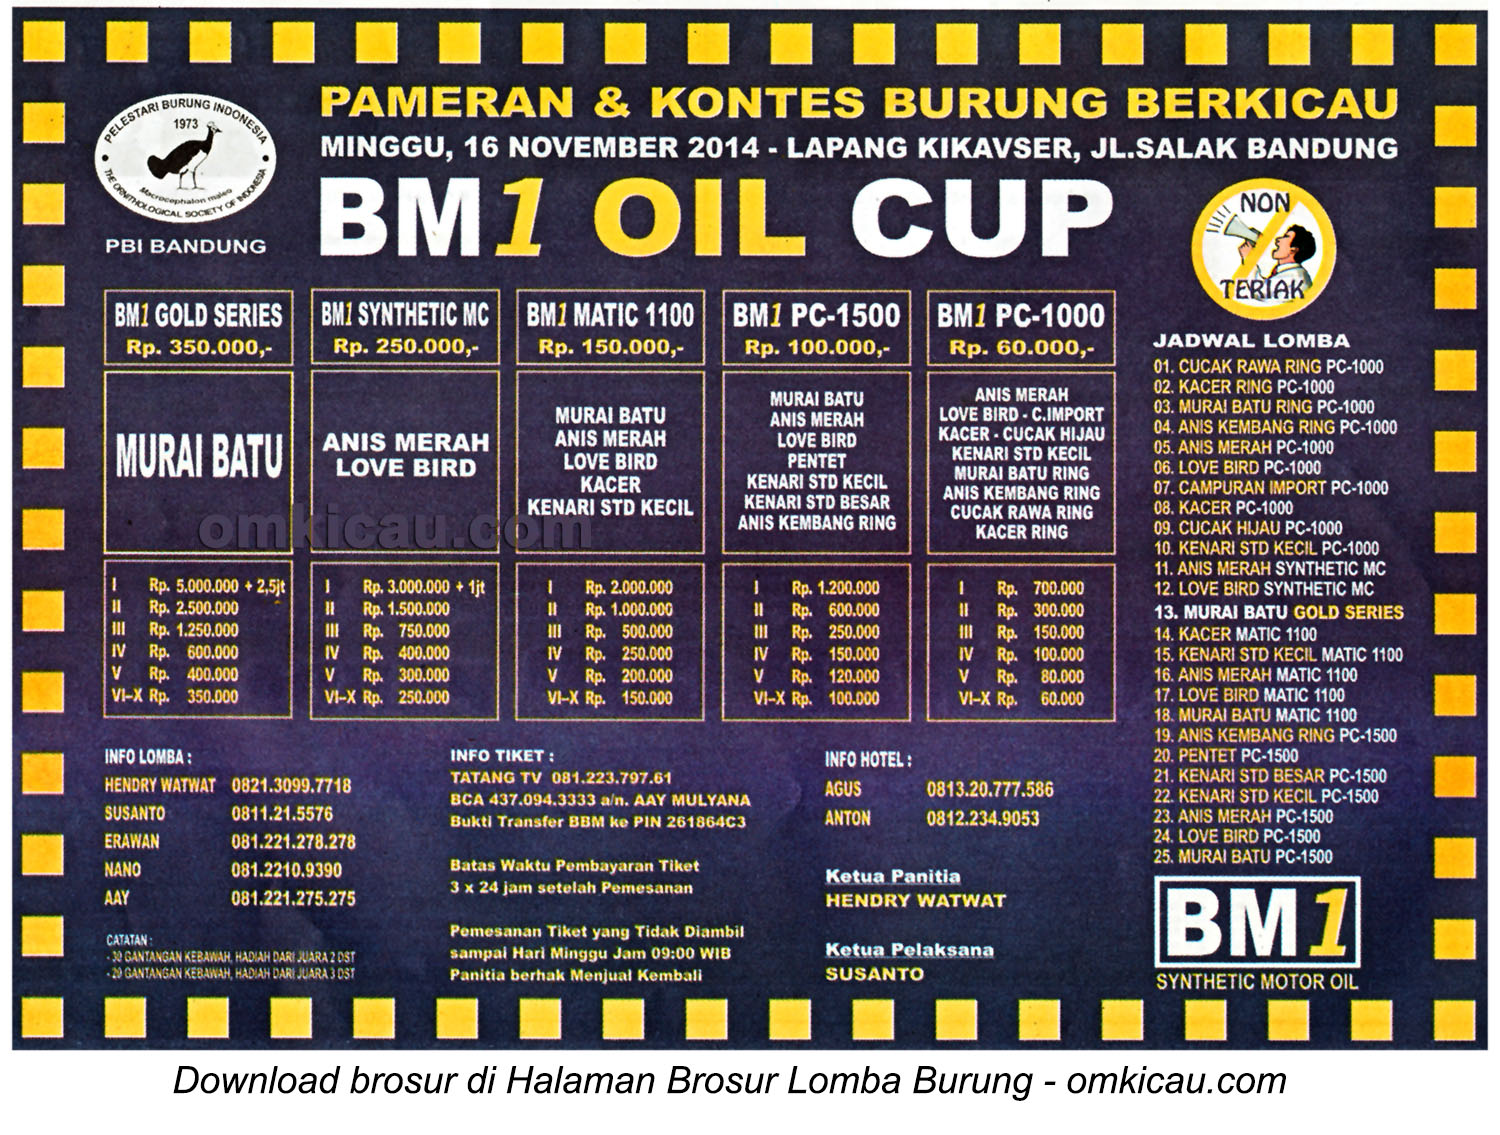 Brosur Lomba Burung Berkicau BM1 Oil Cup, Bandung, 16 November 2014